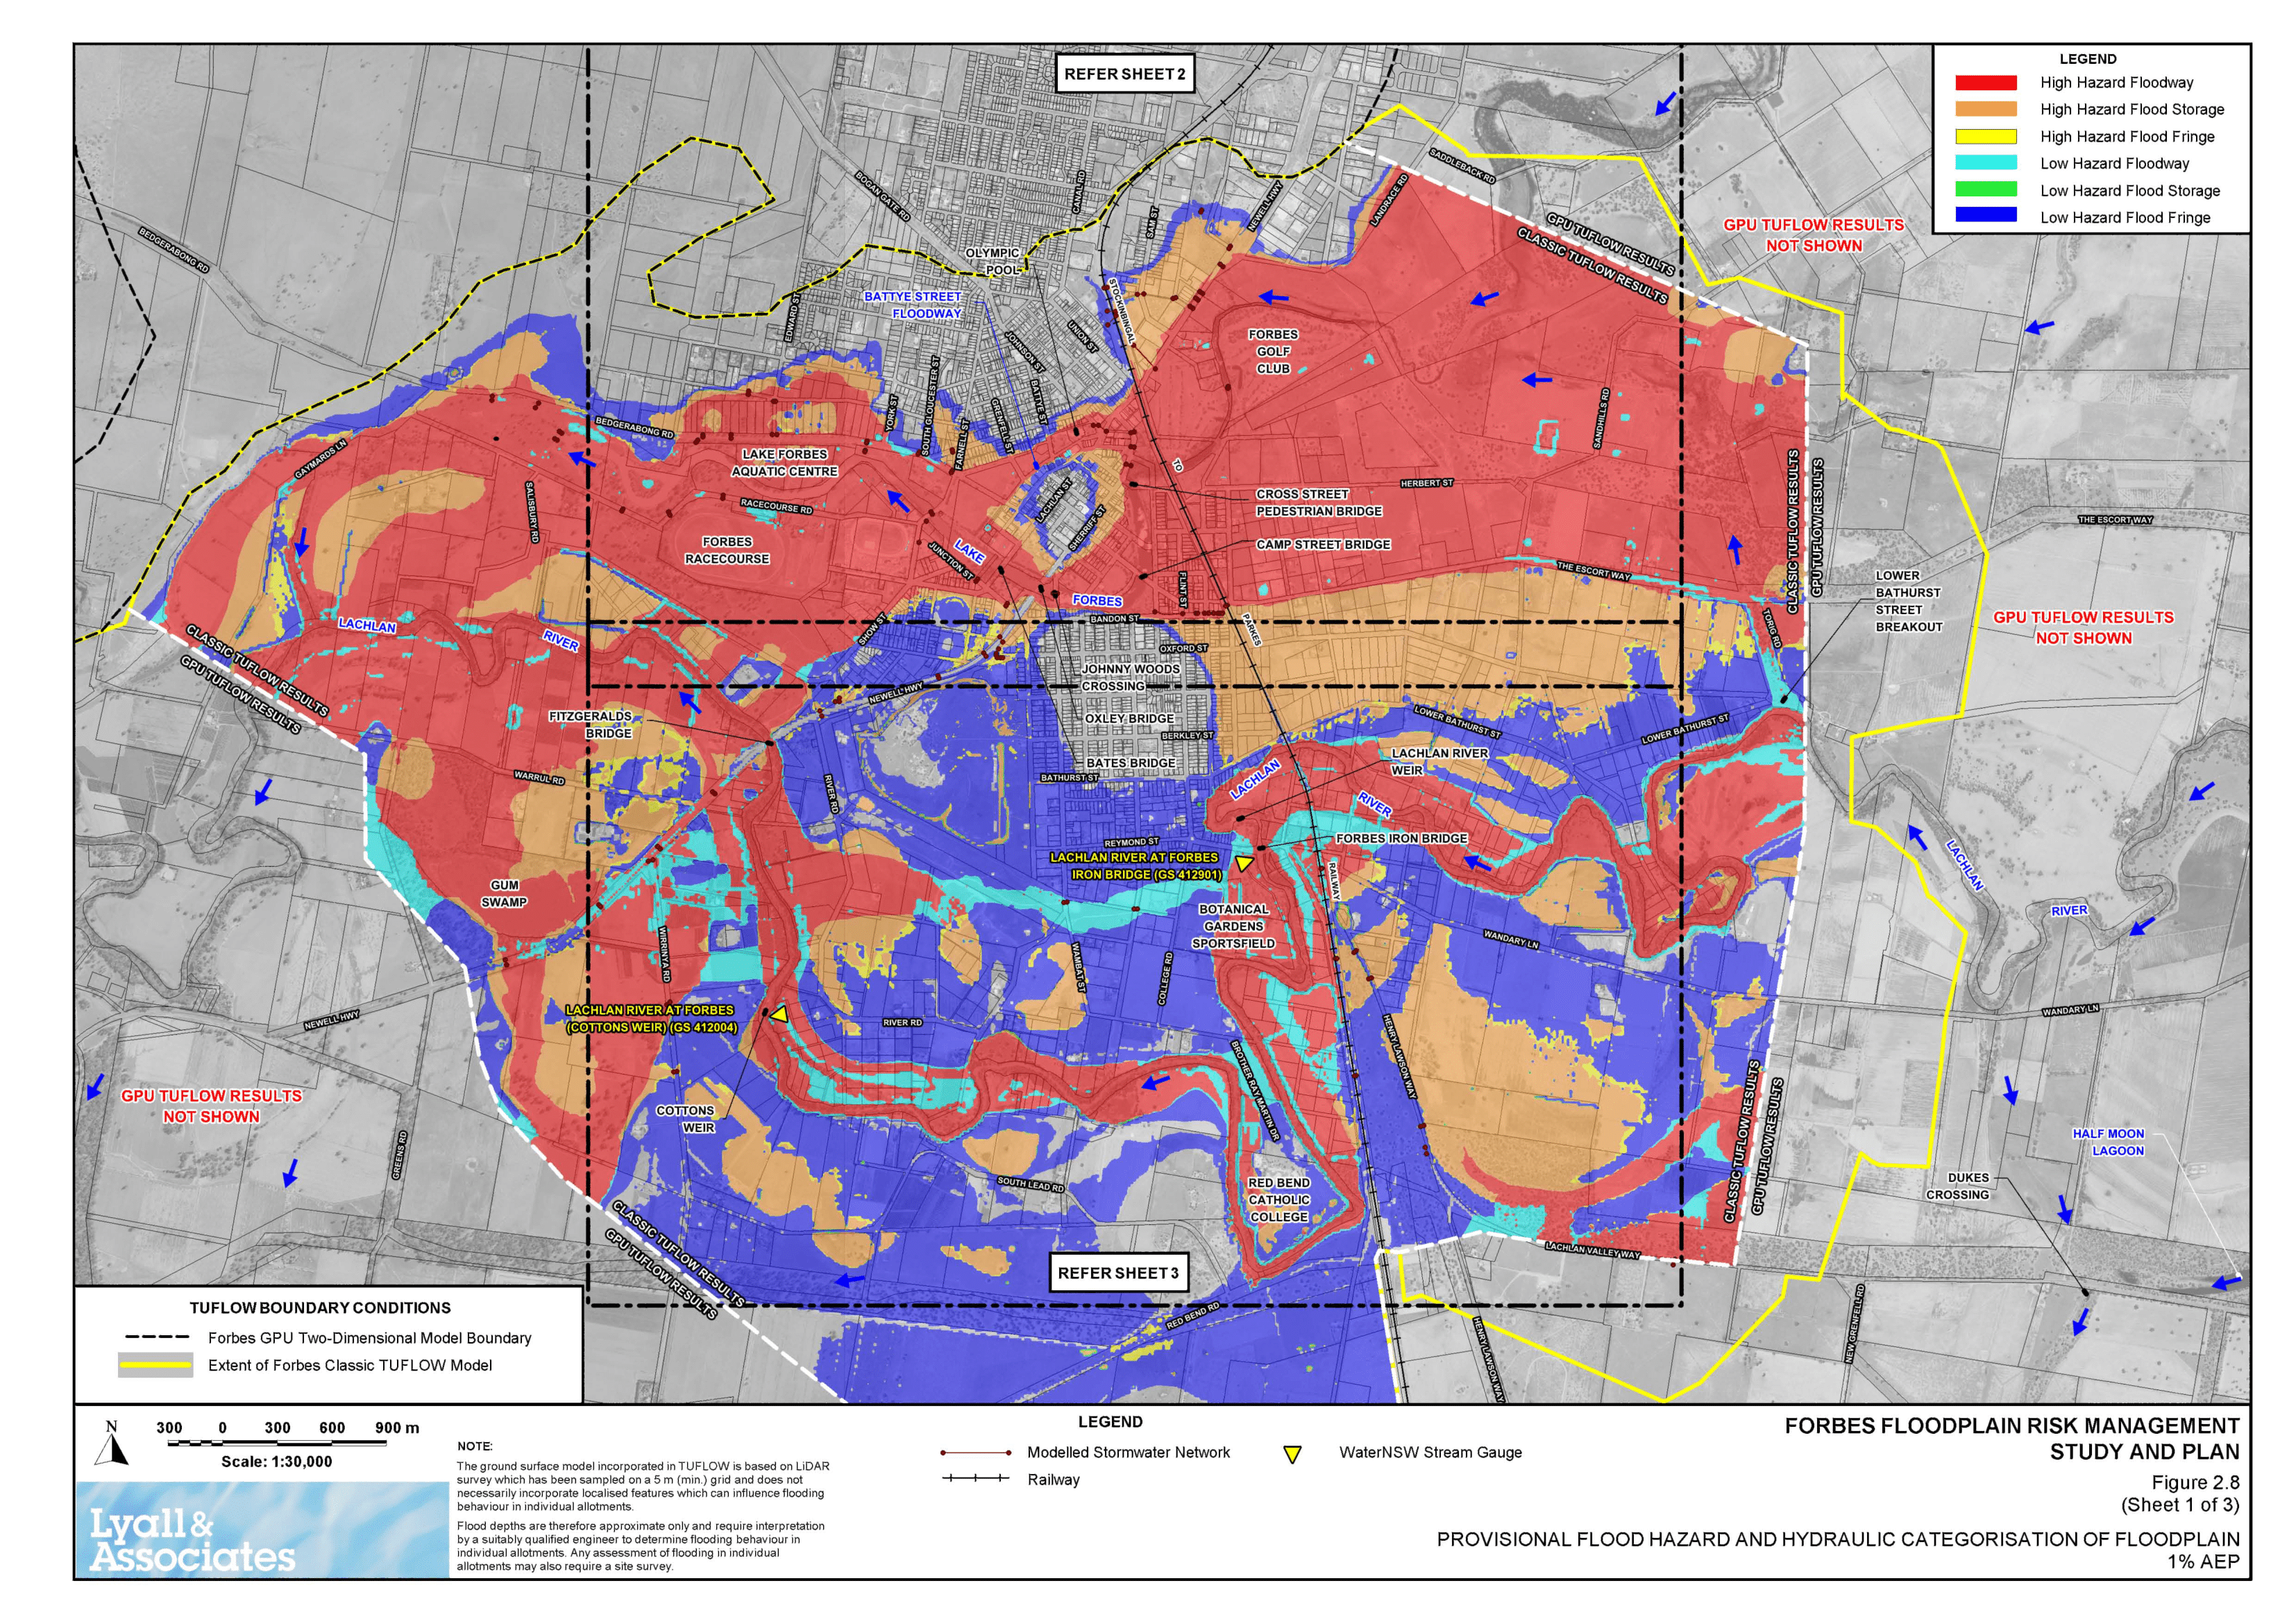 Figure 2.8 (3 Sheets) - Flood Hazard and Categorisation of Floodplain - AEP-1